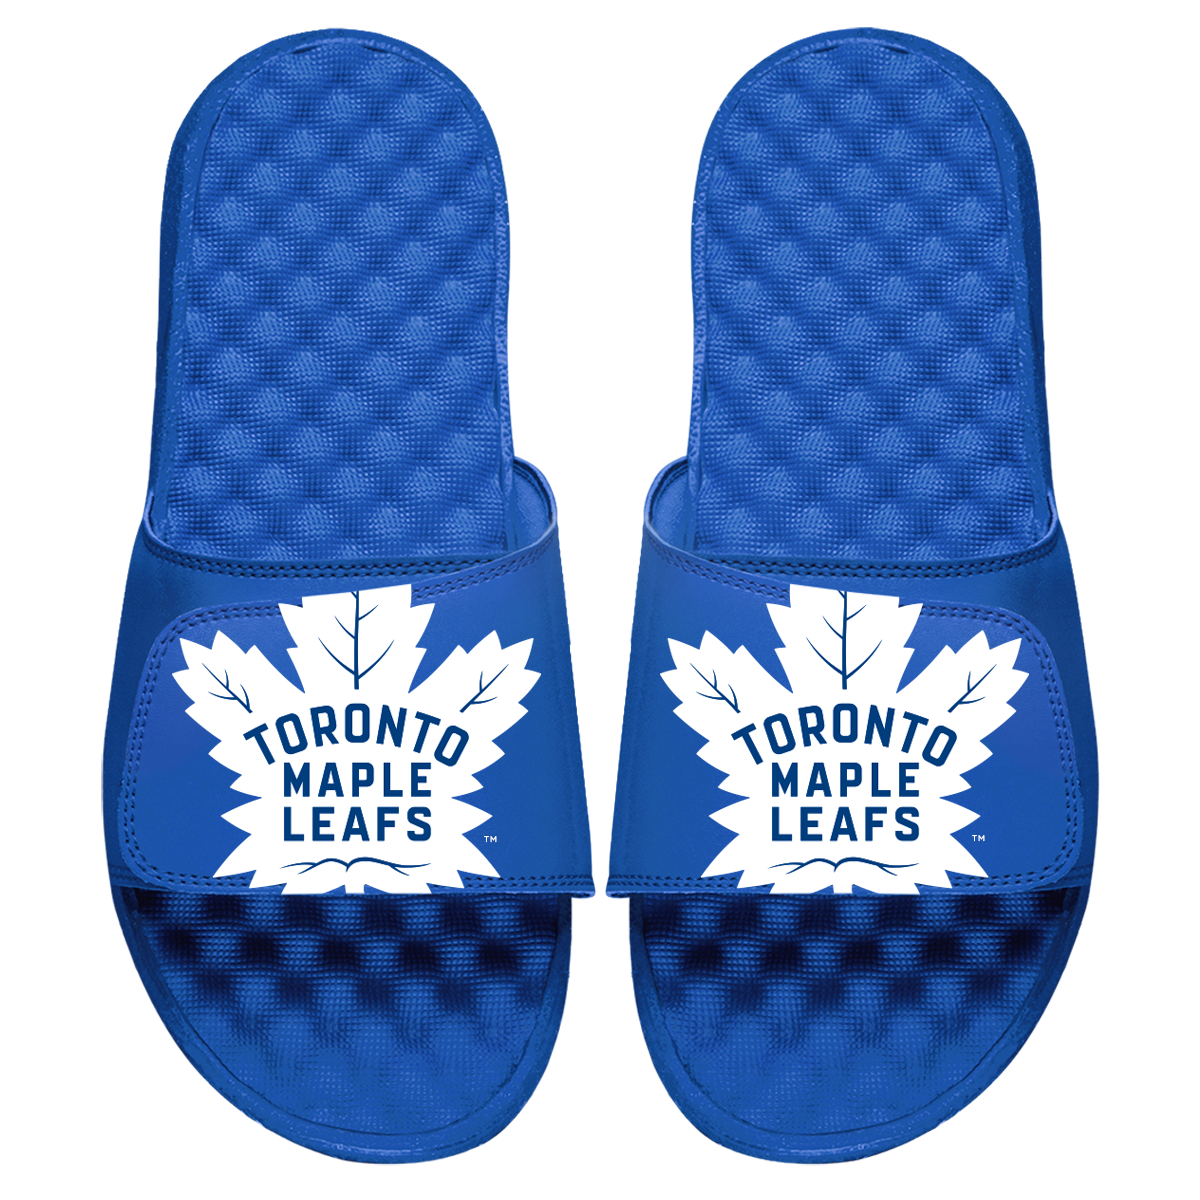 Toronto Maple Leafs Blown Up Slides